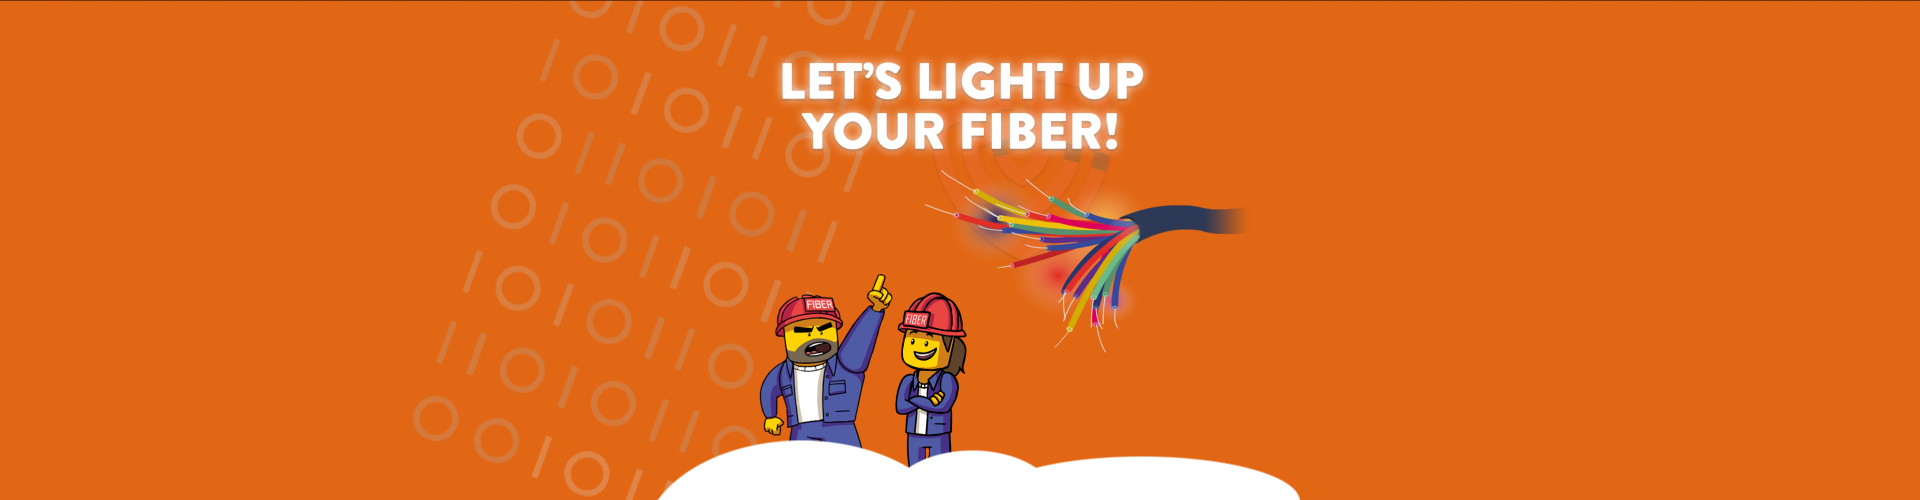 Fiber Crew Light up your Fiber